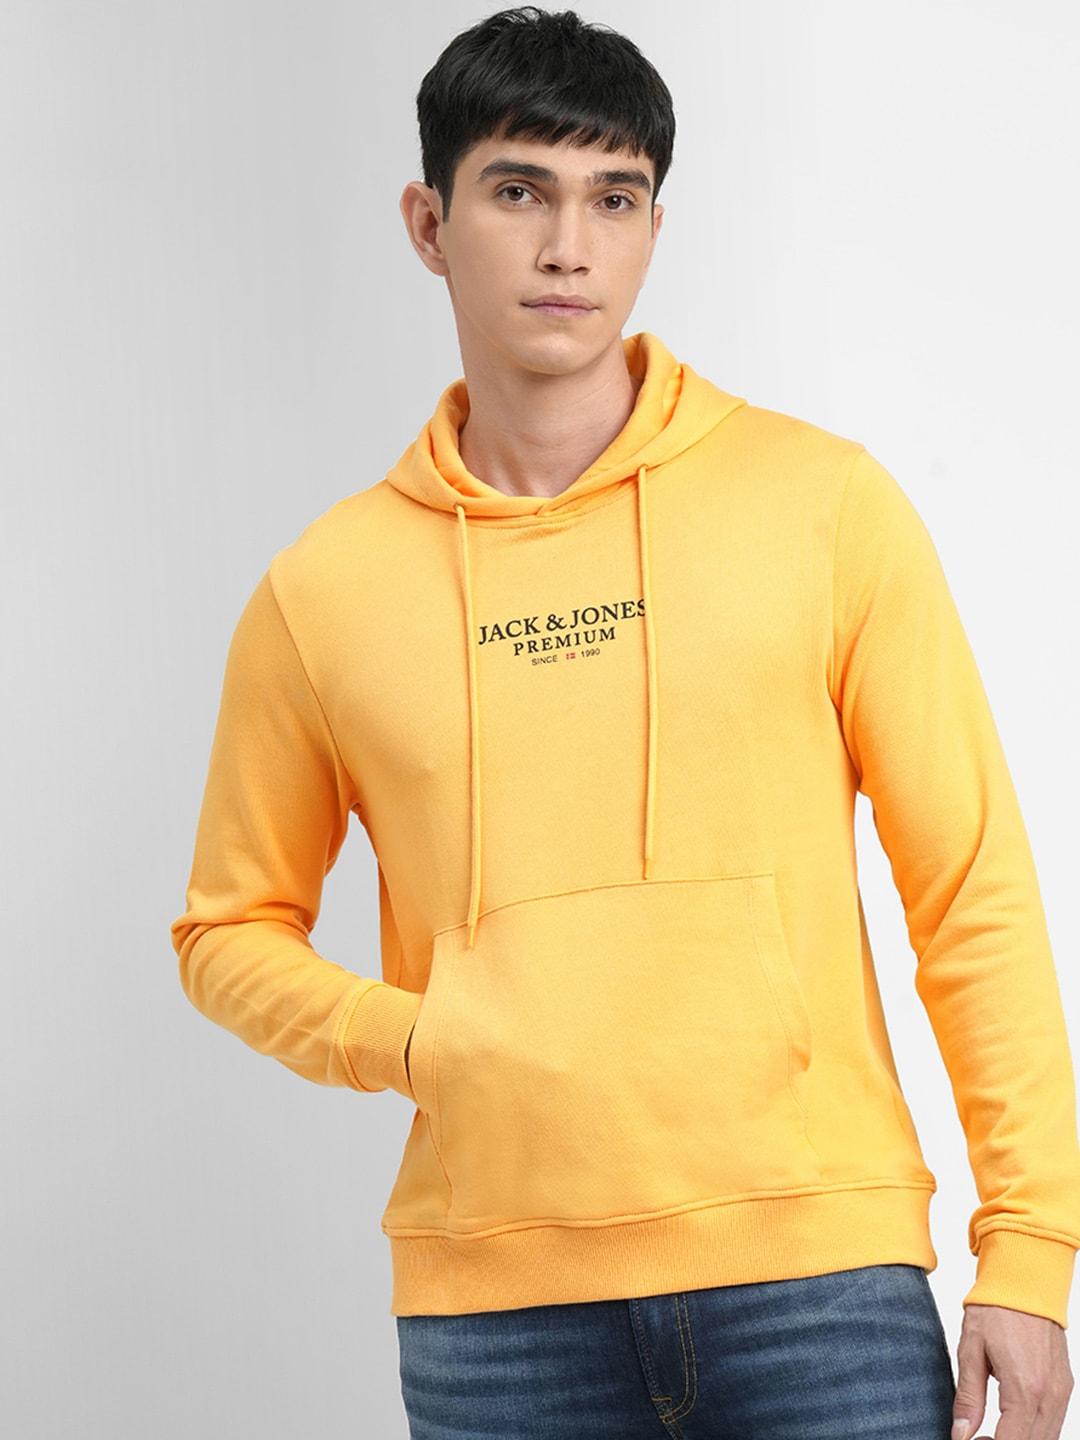 jack-&-jones-men-yellow-brand-logo-printed-hooded-sweatshirt